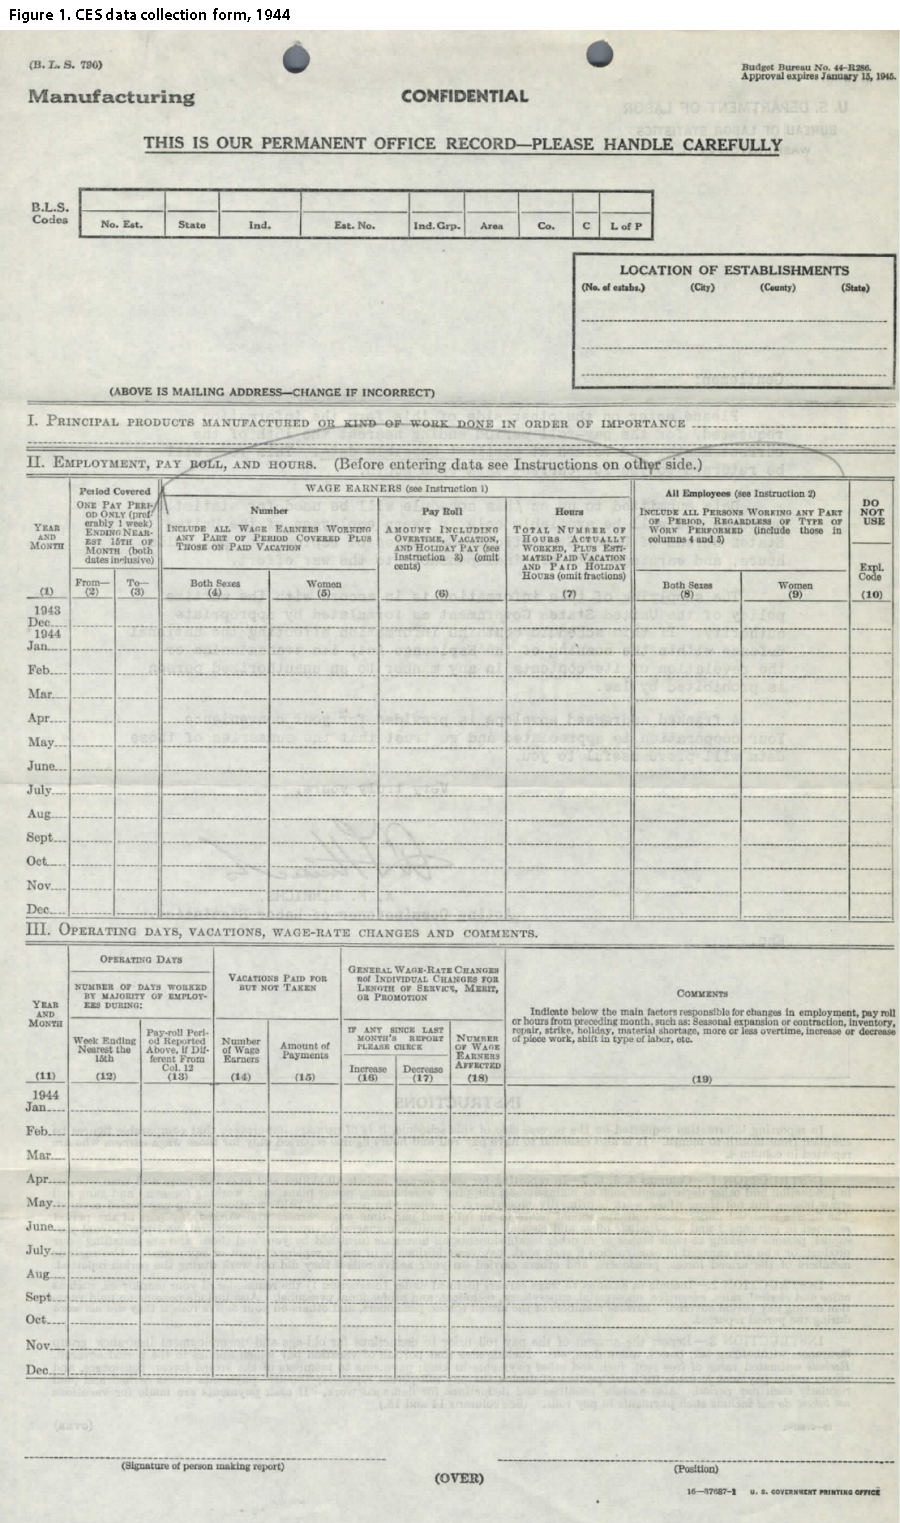 CES 1944 collection form